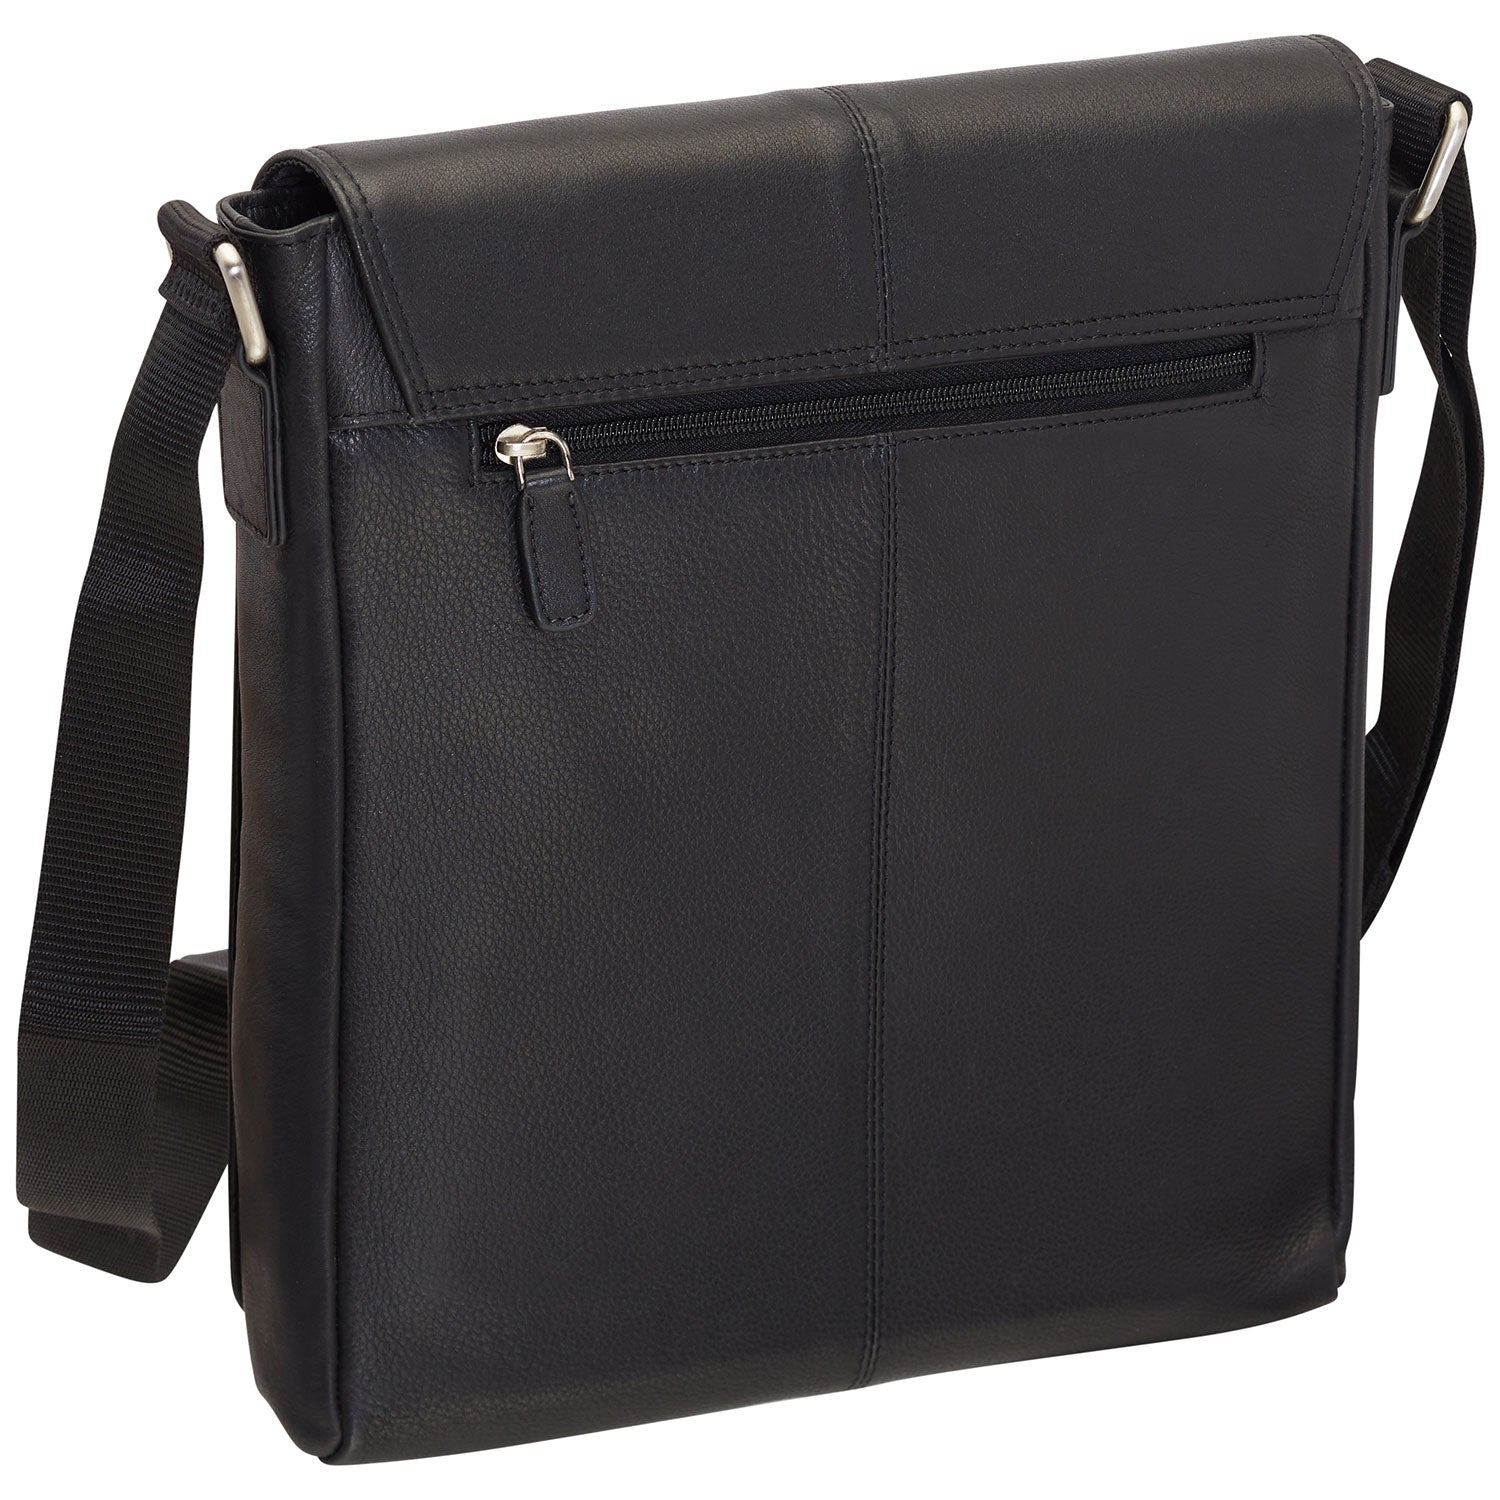 Mancini Leather Messenger Style Unisex Bag for Tablet/ E-reader, 10.25" x 3" x 12", Black